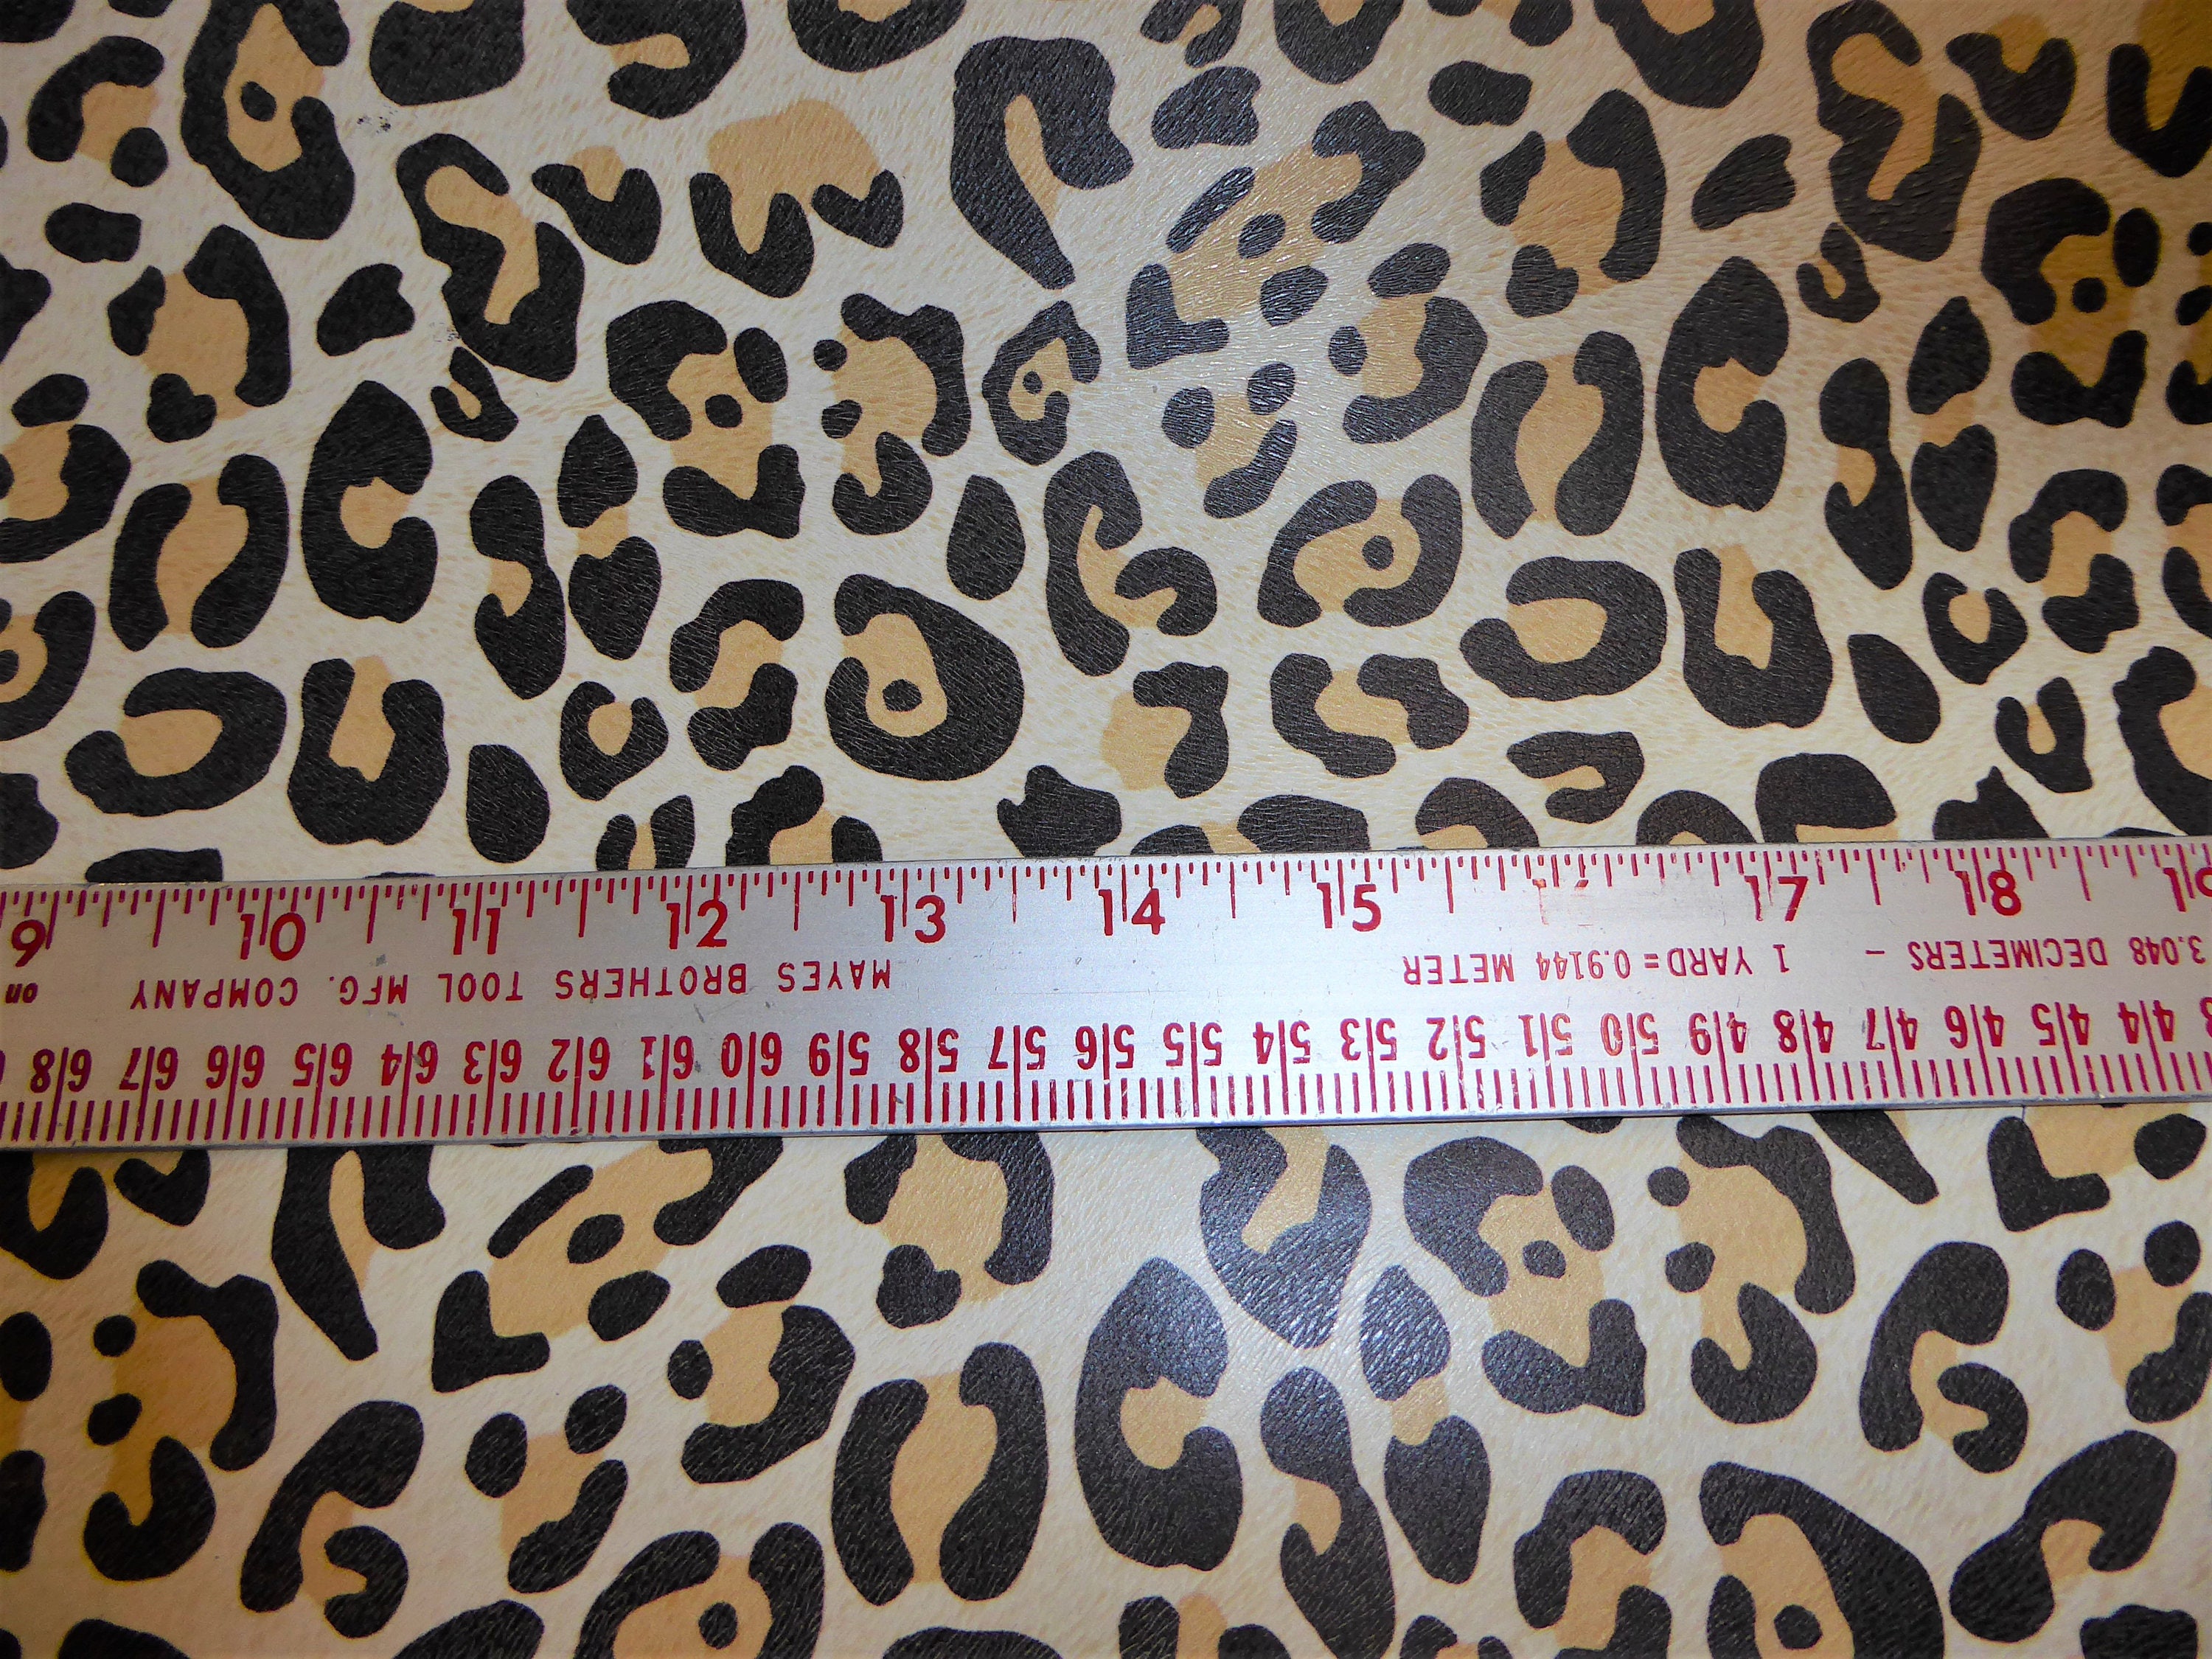 Leather 3 6 sq ft Almond LARGE Cheetah / Leopard Print Grain | Etsy